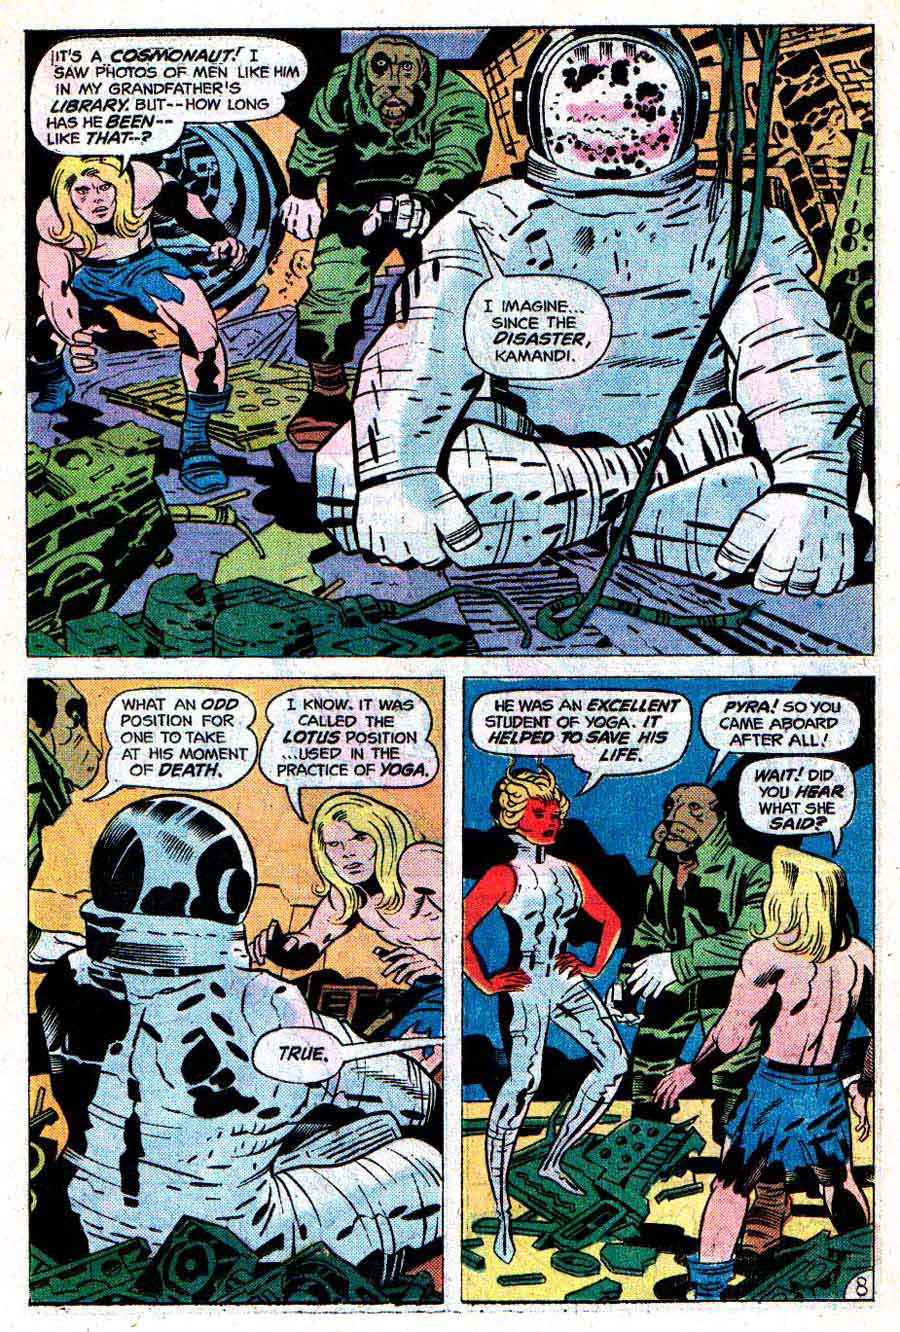 Kamandi #35 Jack Kirby dc bronze age 1970s science fiction page